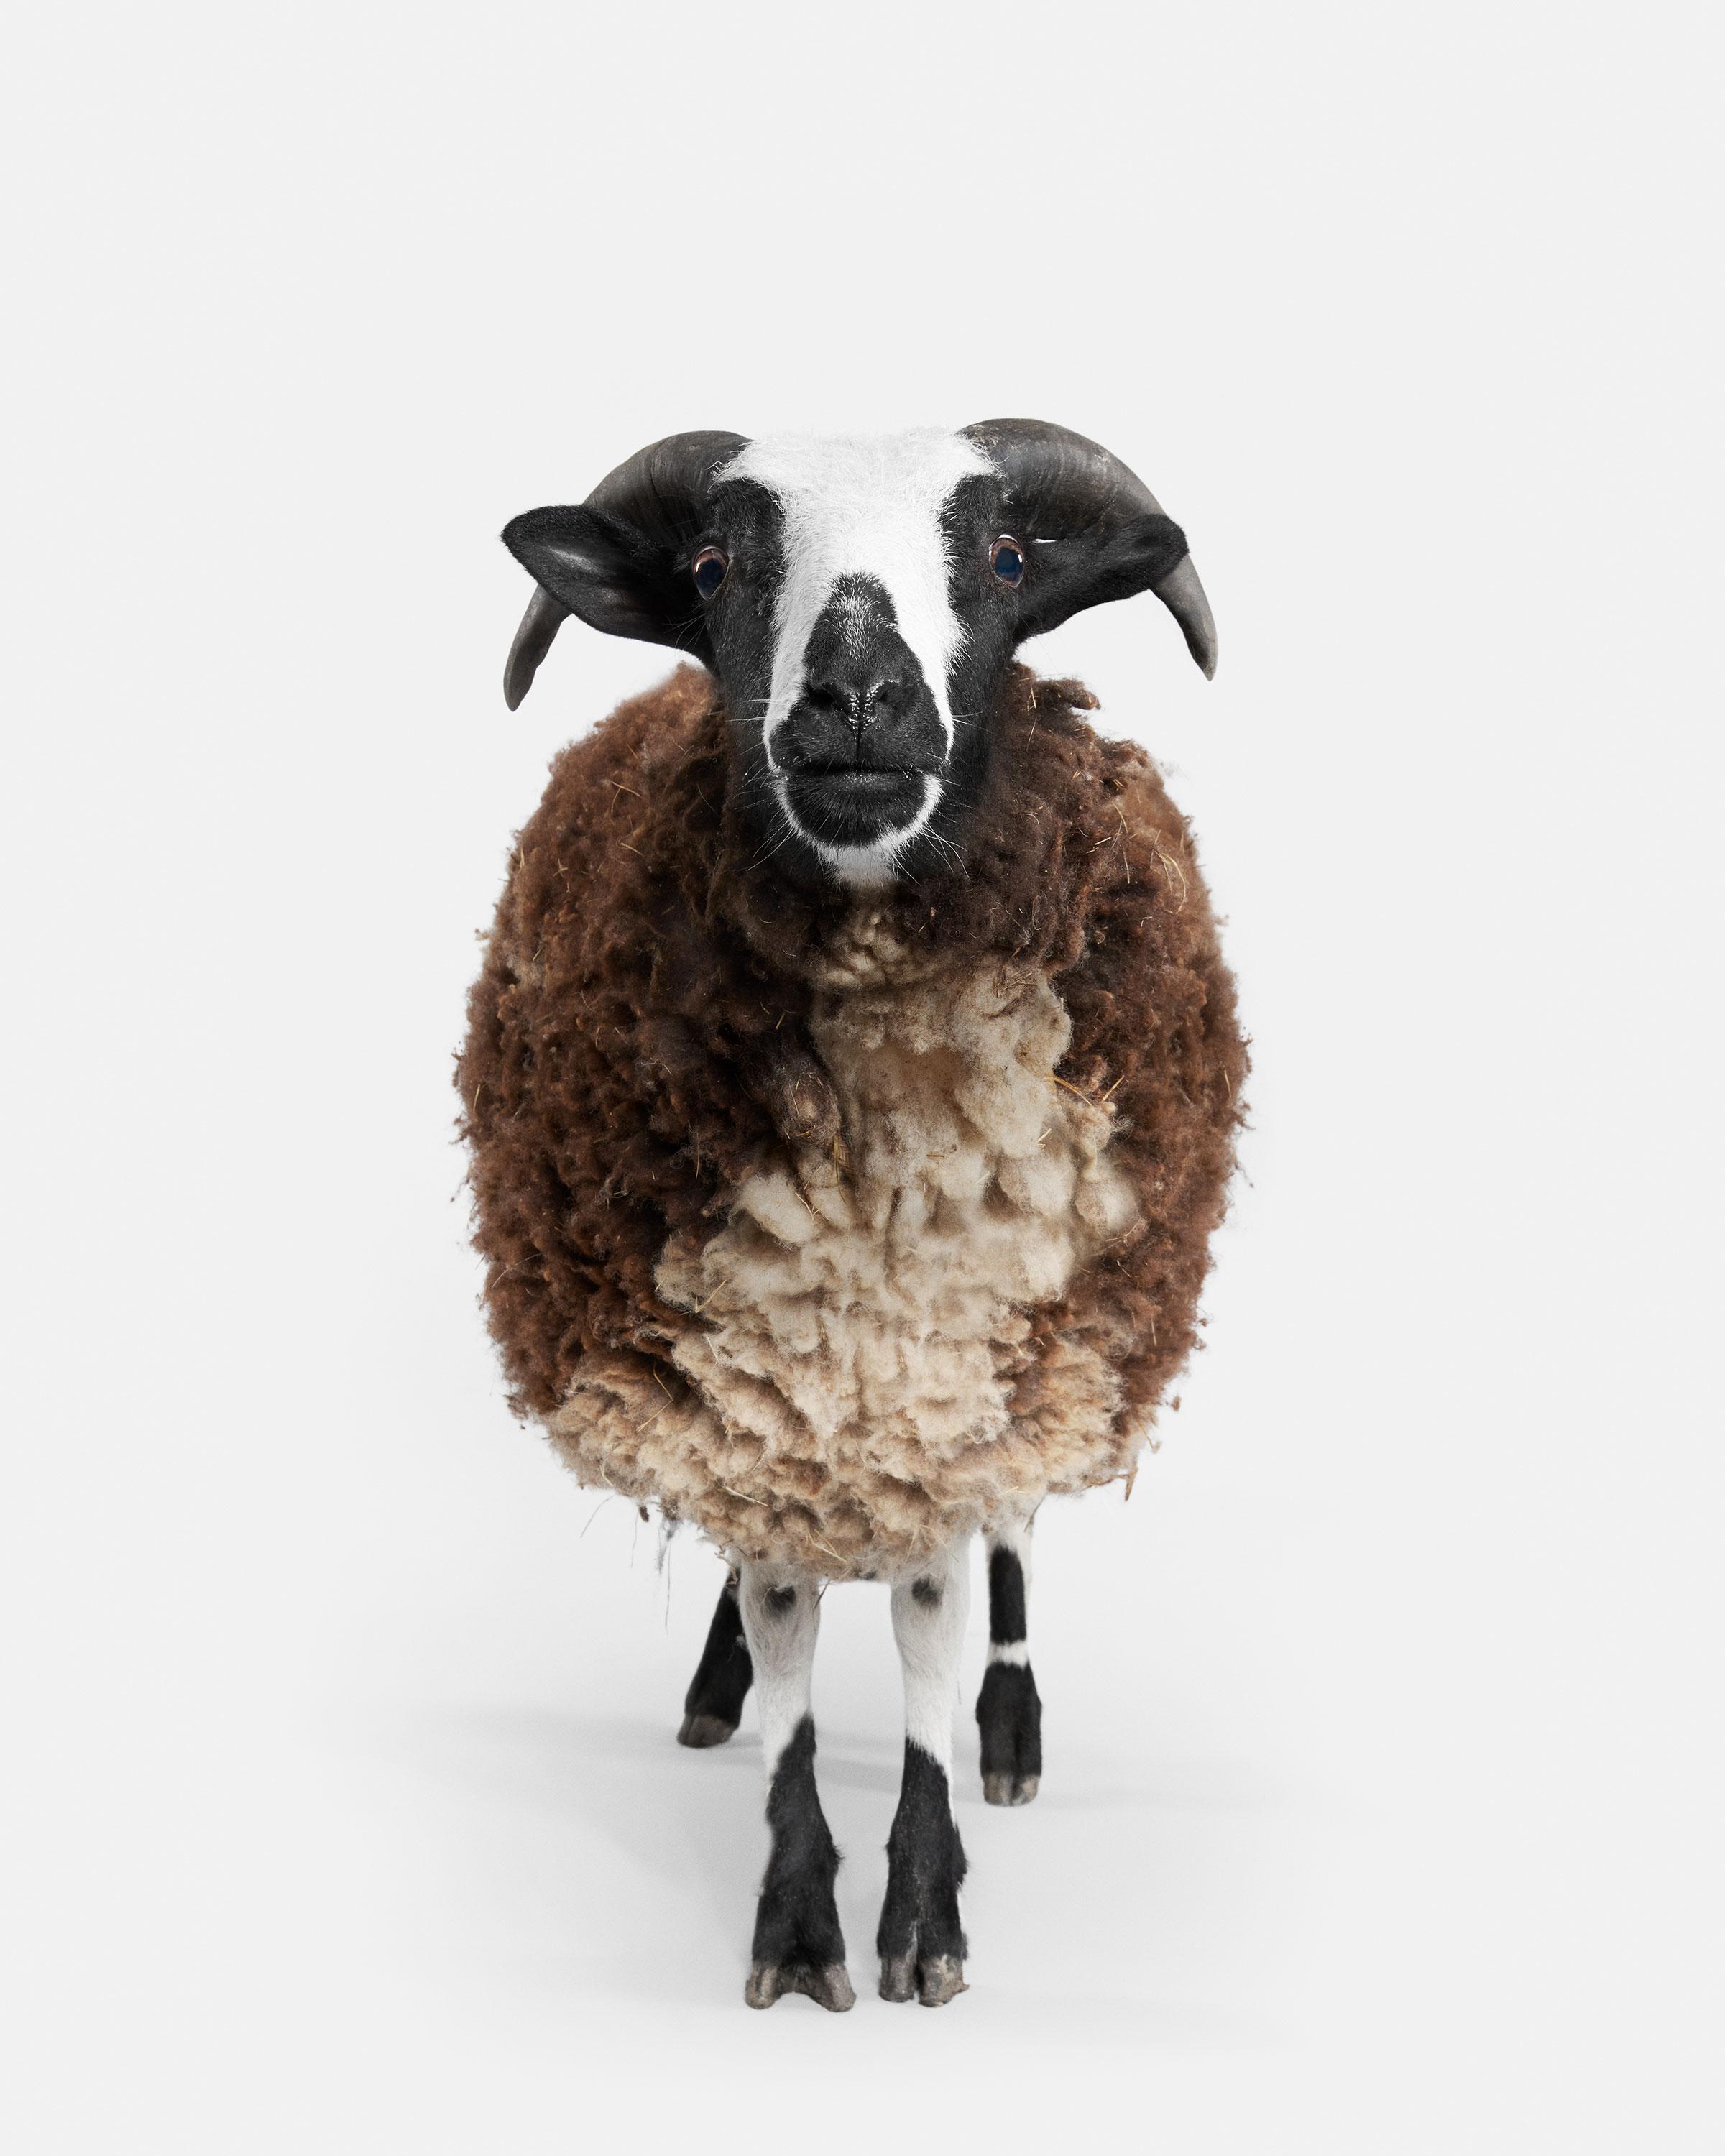 Randal Ford – Jacob Sheep No. 2, Fotografie 2018